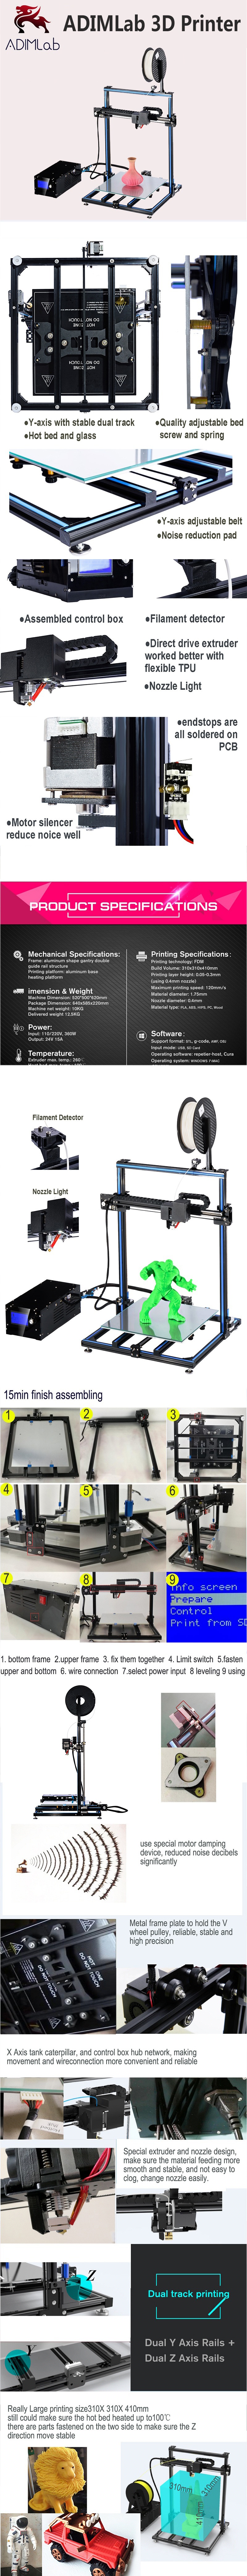 ADIMLab-I3-Plus-3D-Printer-DIY-Kit-310310410-Large-Printing-Size-With-Dual-Track-Printing-175mm-04mm-1292380